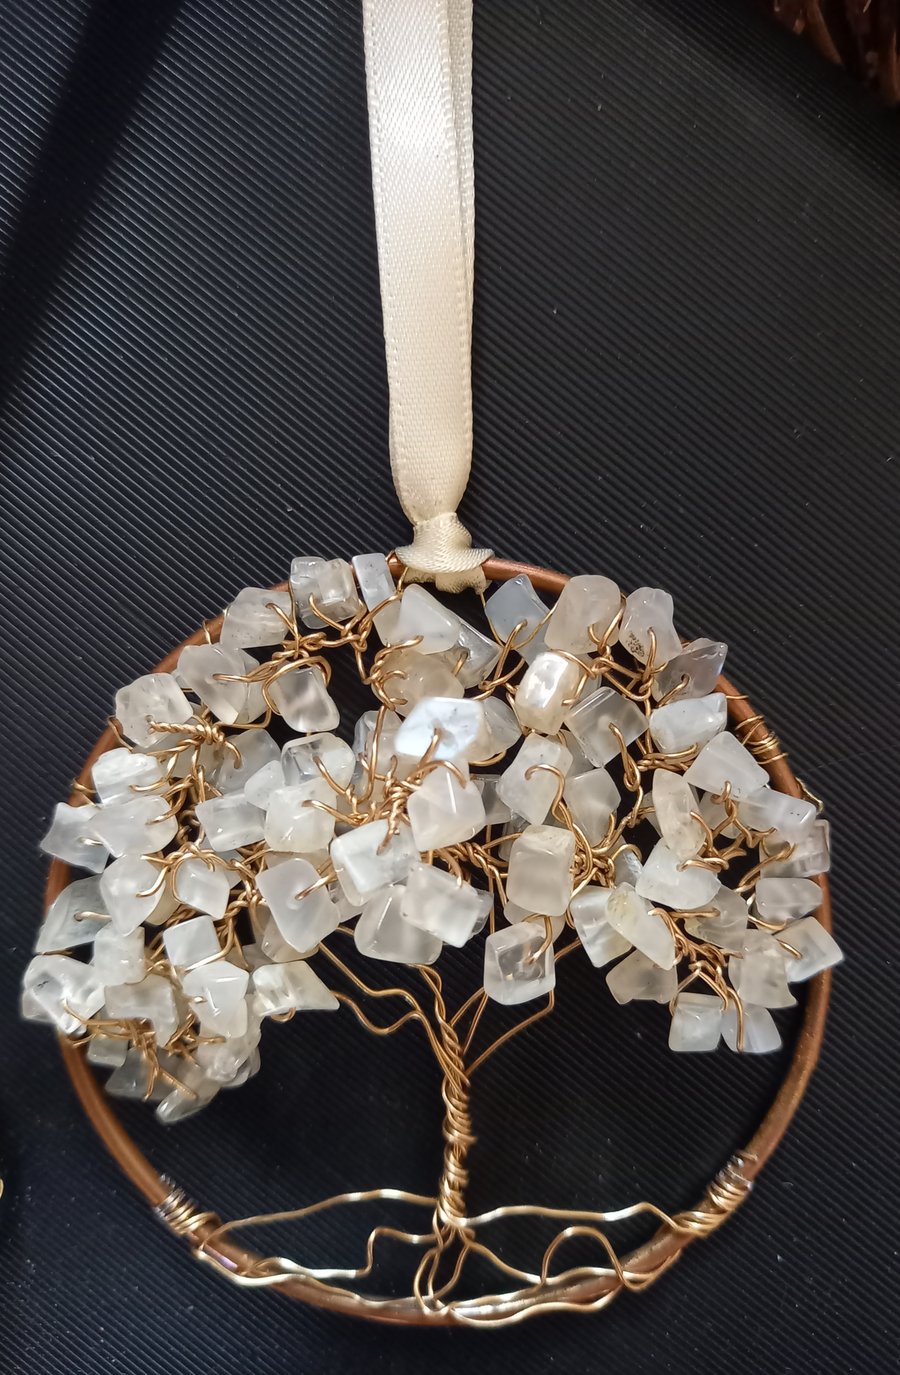  Moonstone Crystal tree of life bangle hangers on a ribbon 